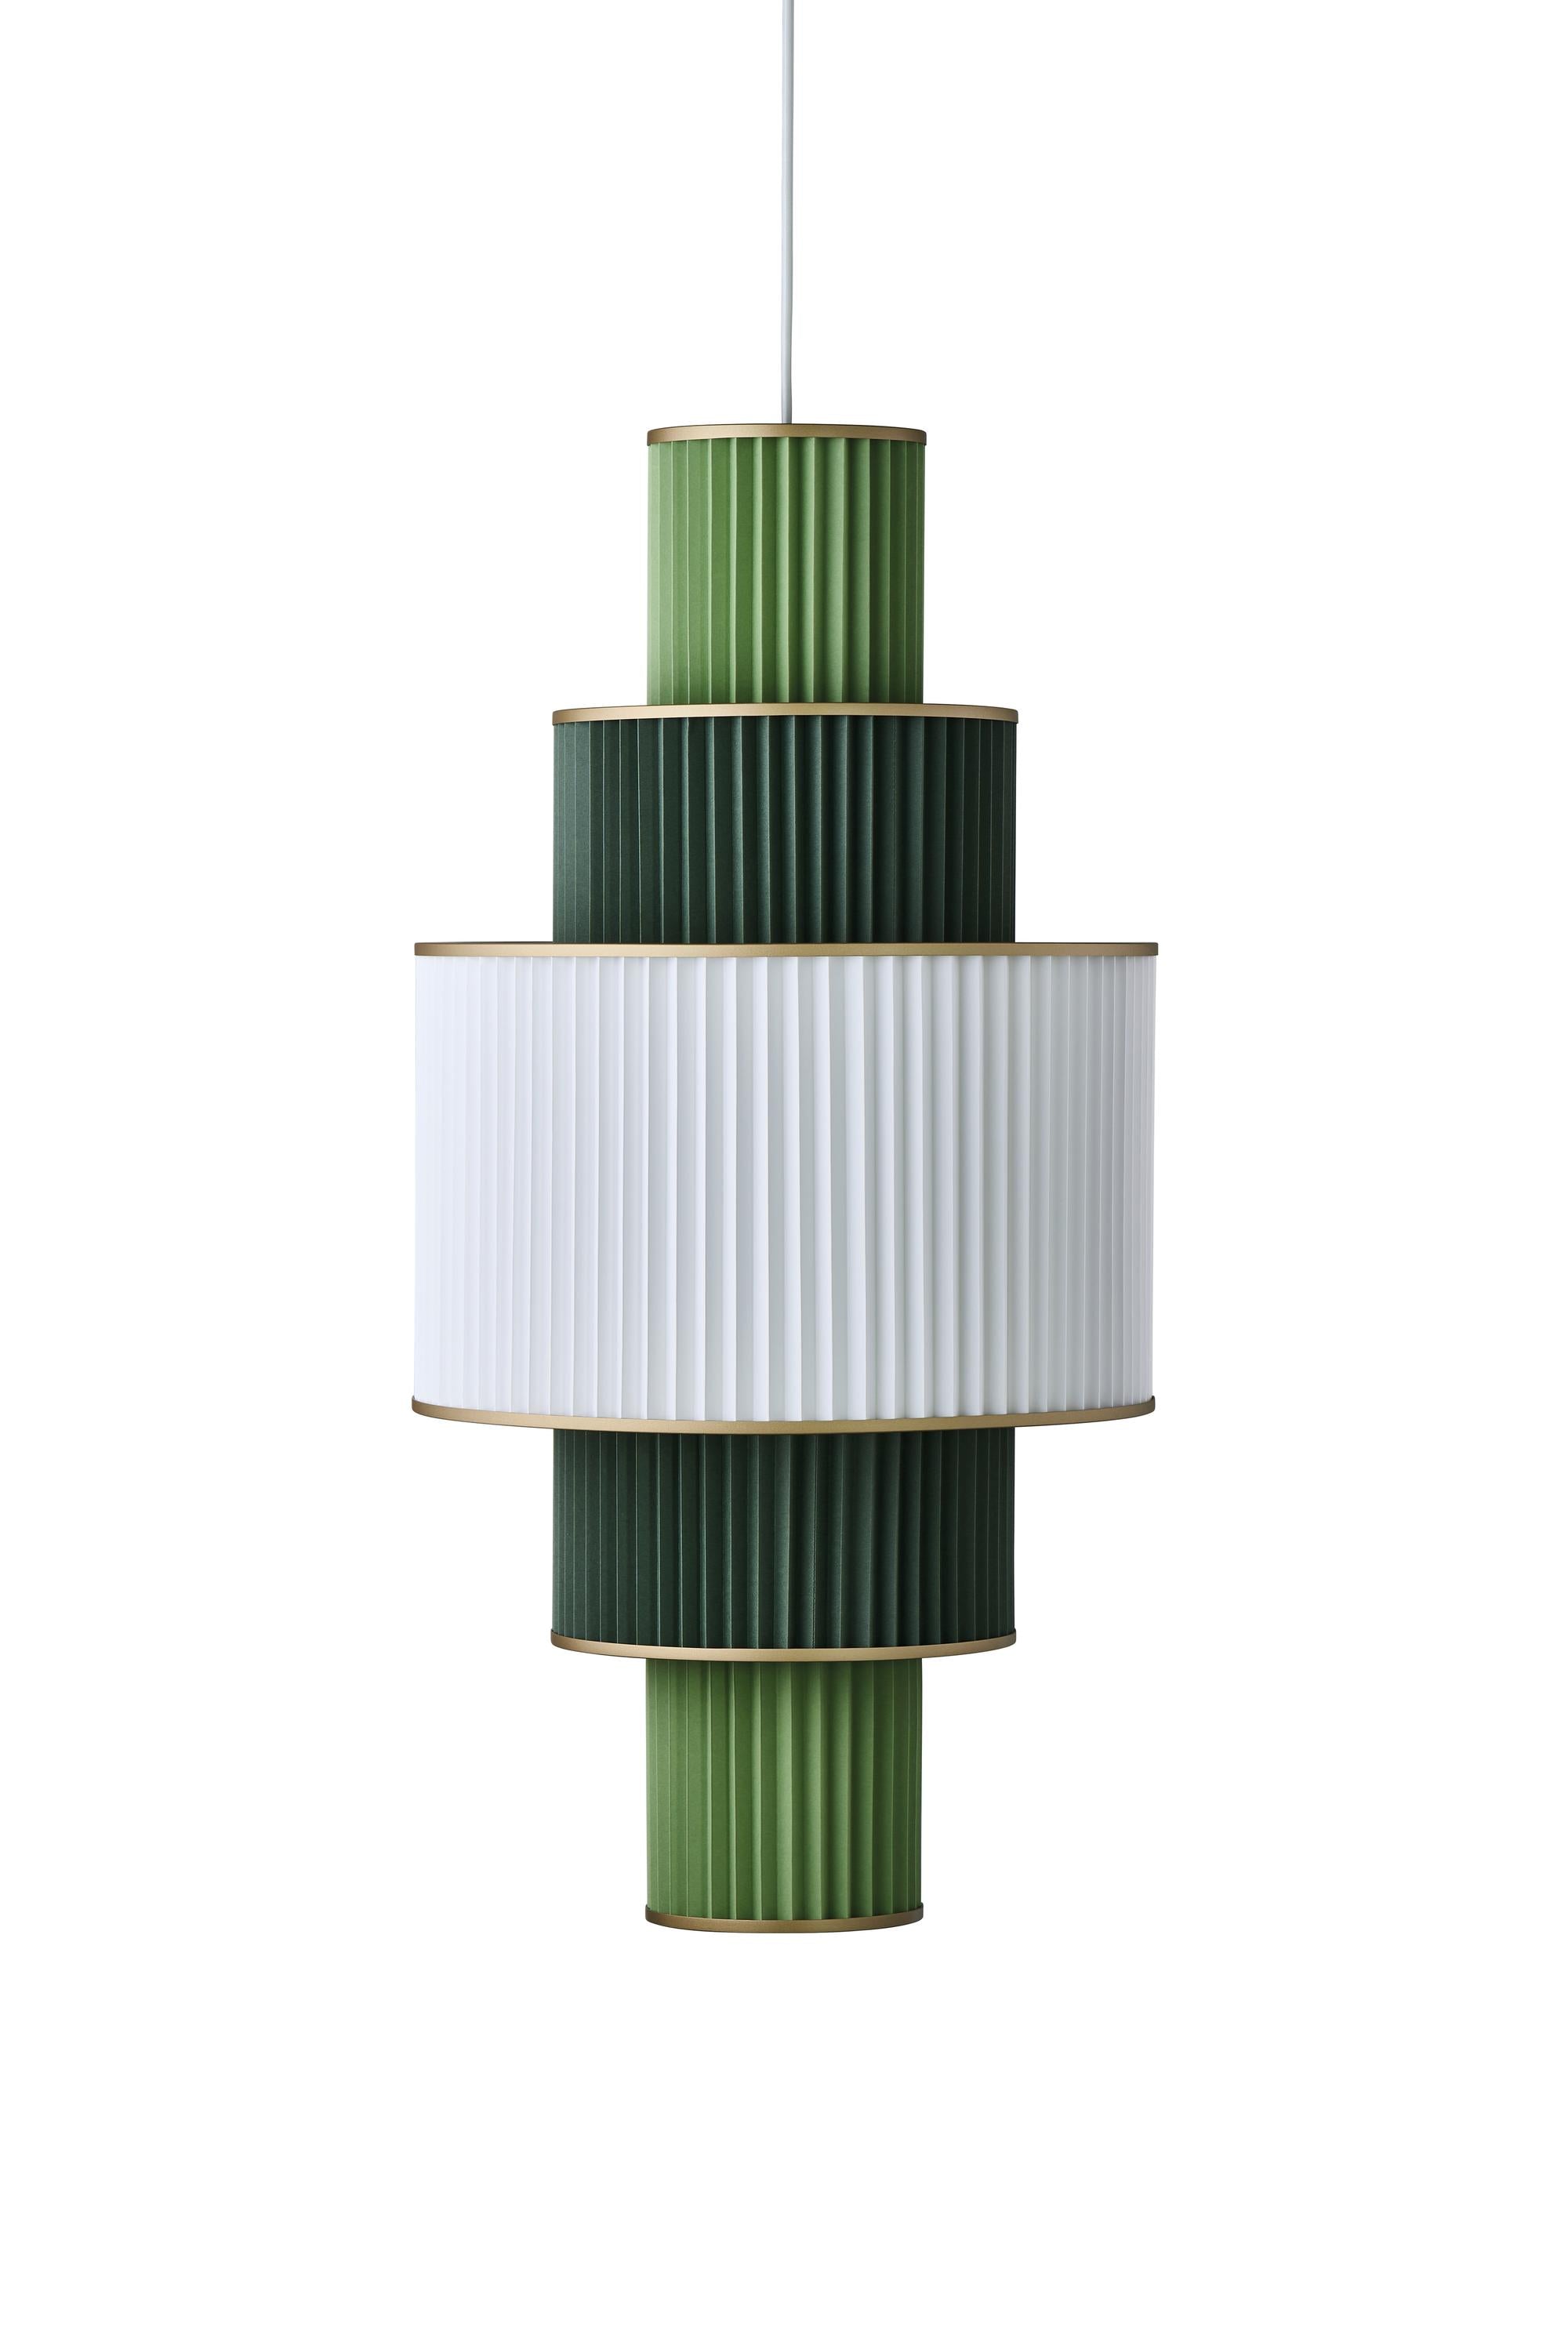 Le Klint Plivello Suspension Lamp Golden/White/Light Green med 5 nuancer (S M L M S)